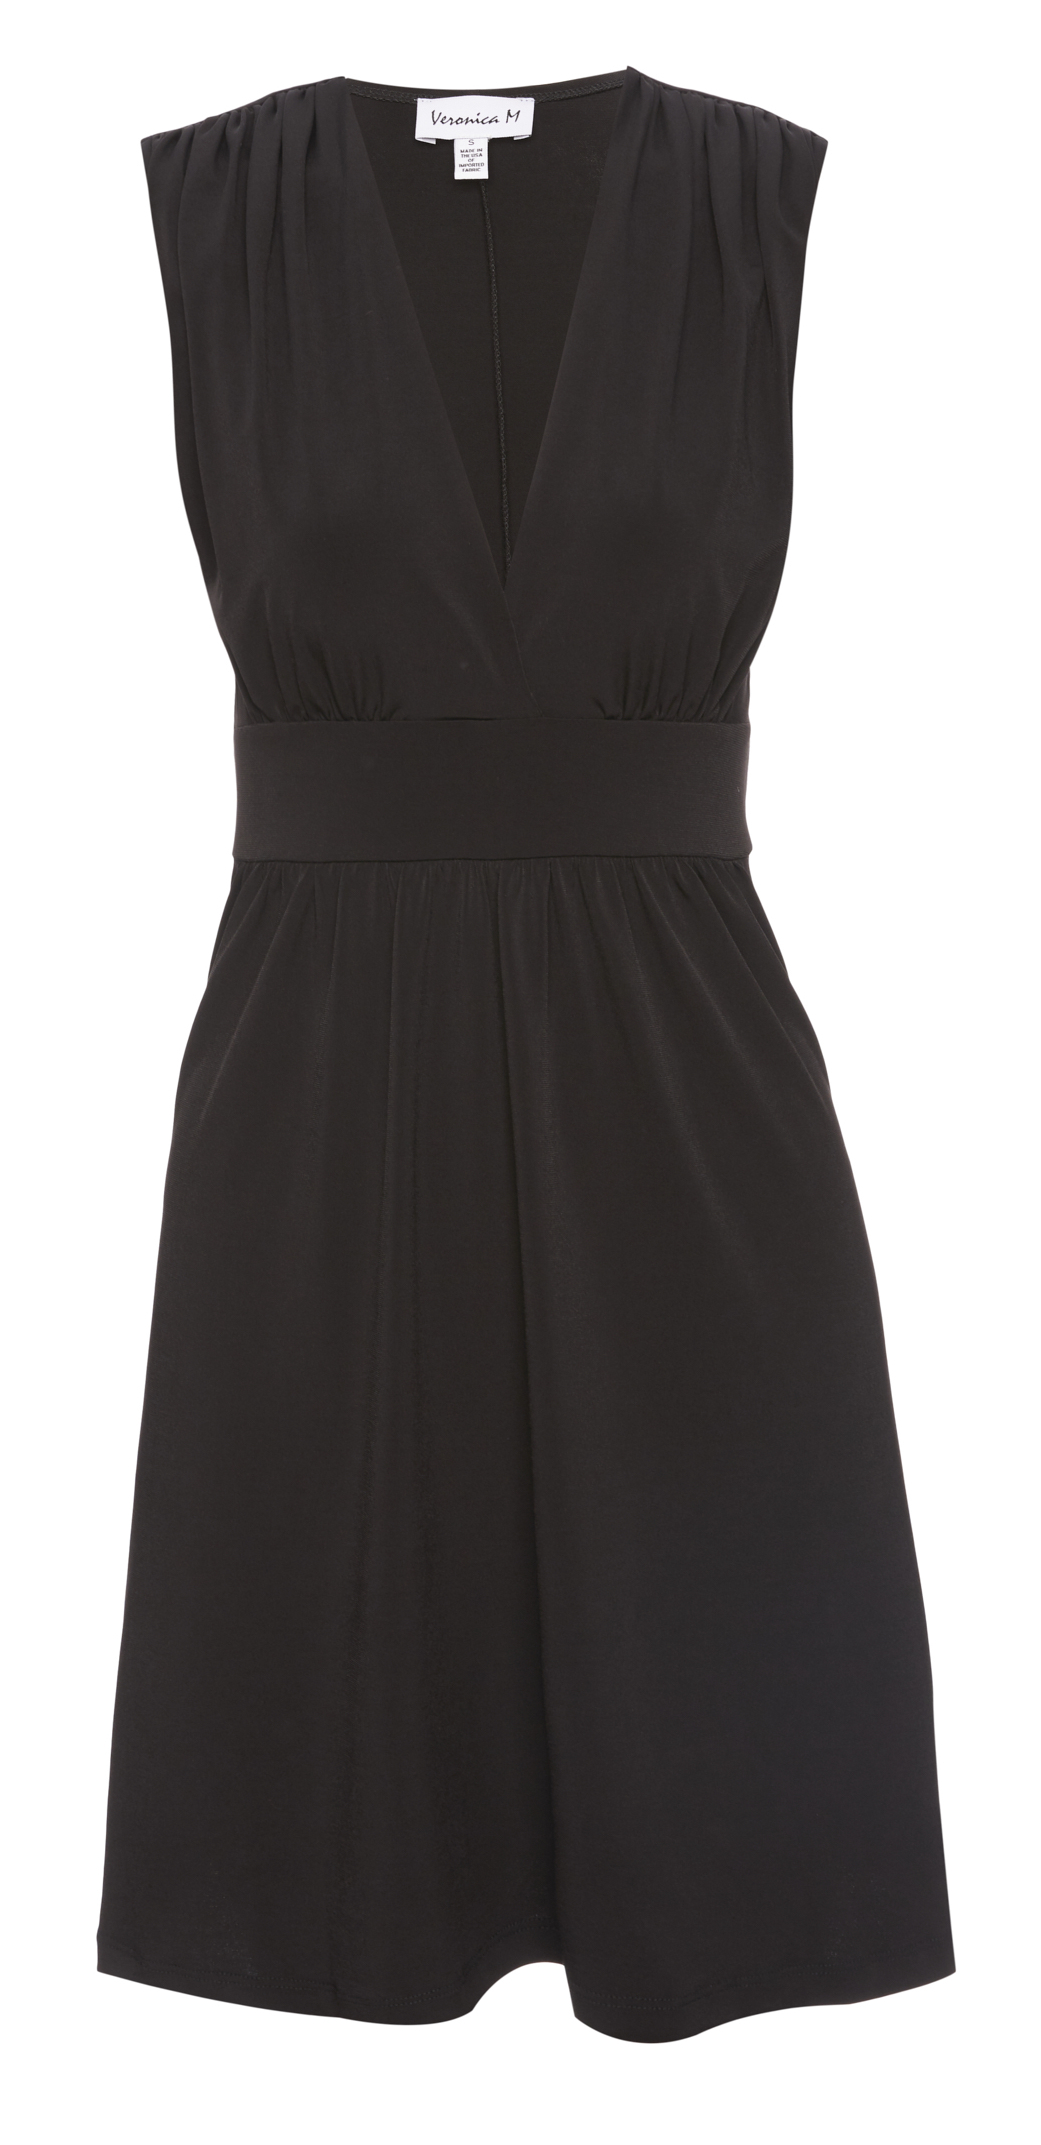 Veronica M V Neckline Sleeveless Dress in Black XS